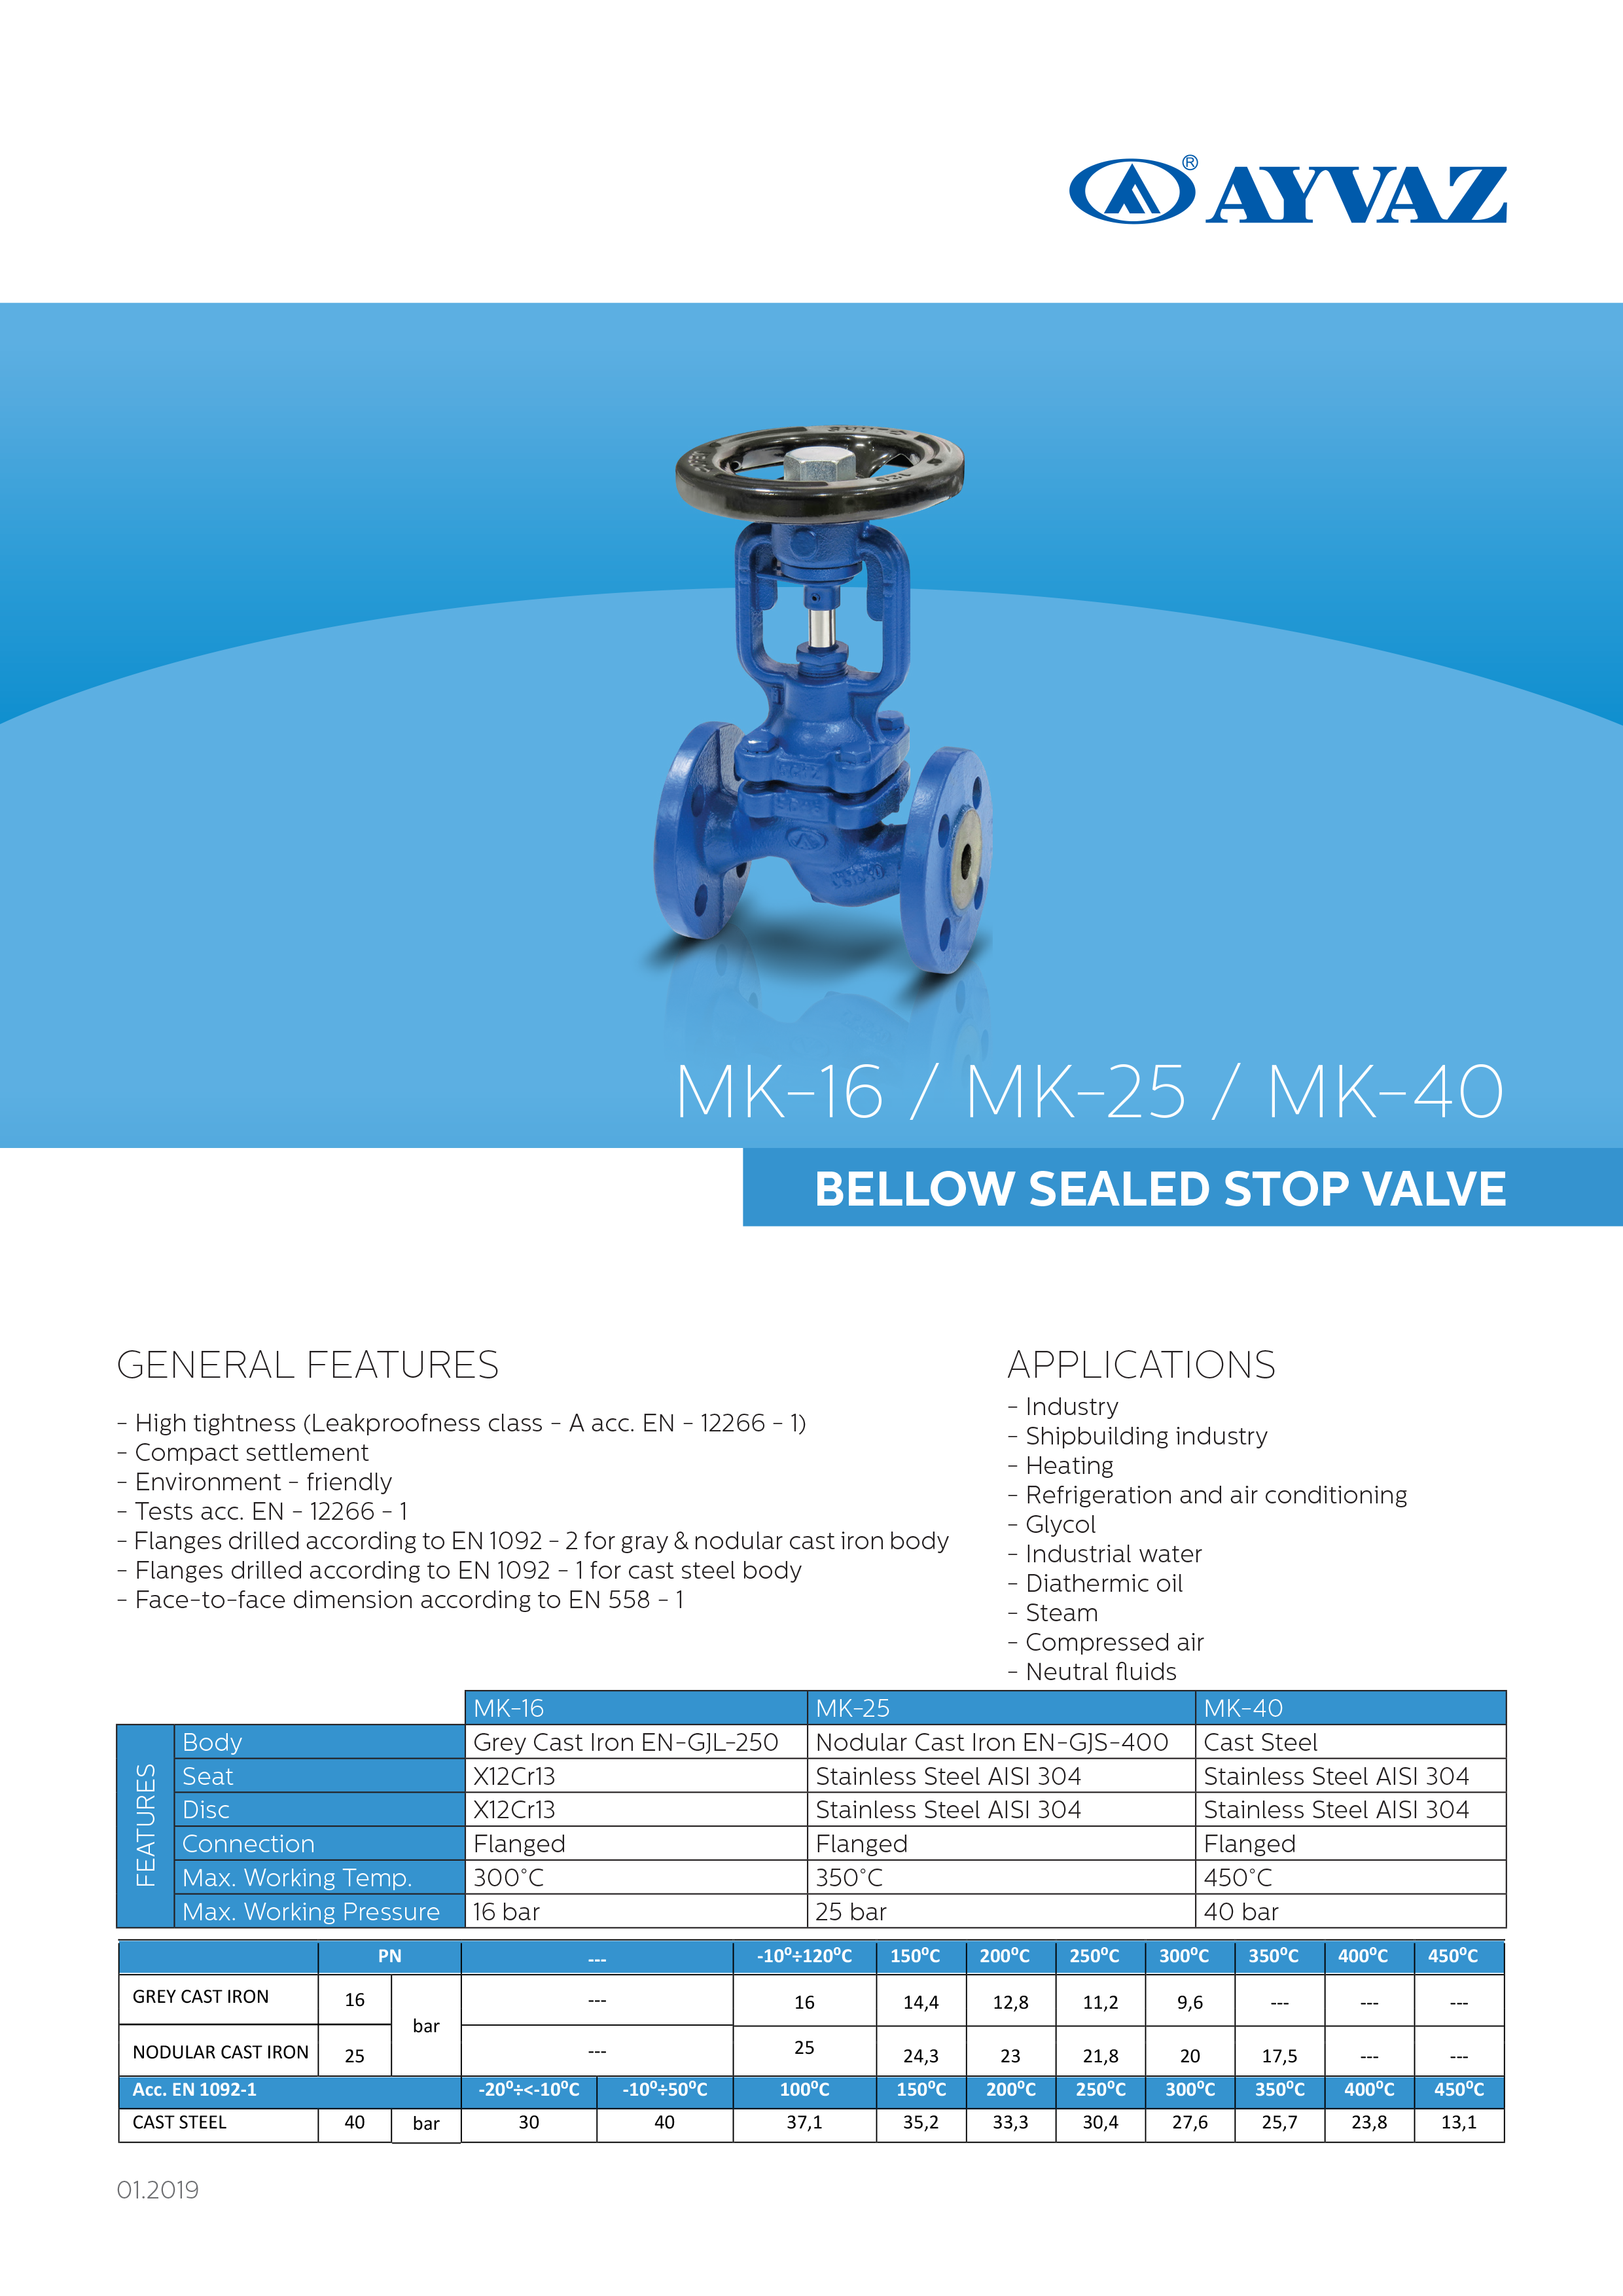 Ayvaz bellow sealed stop valve